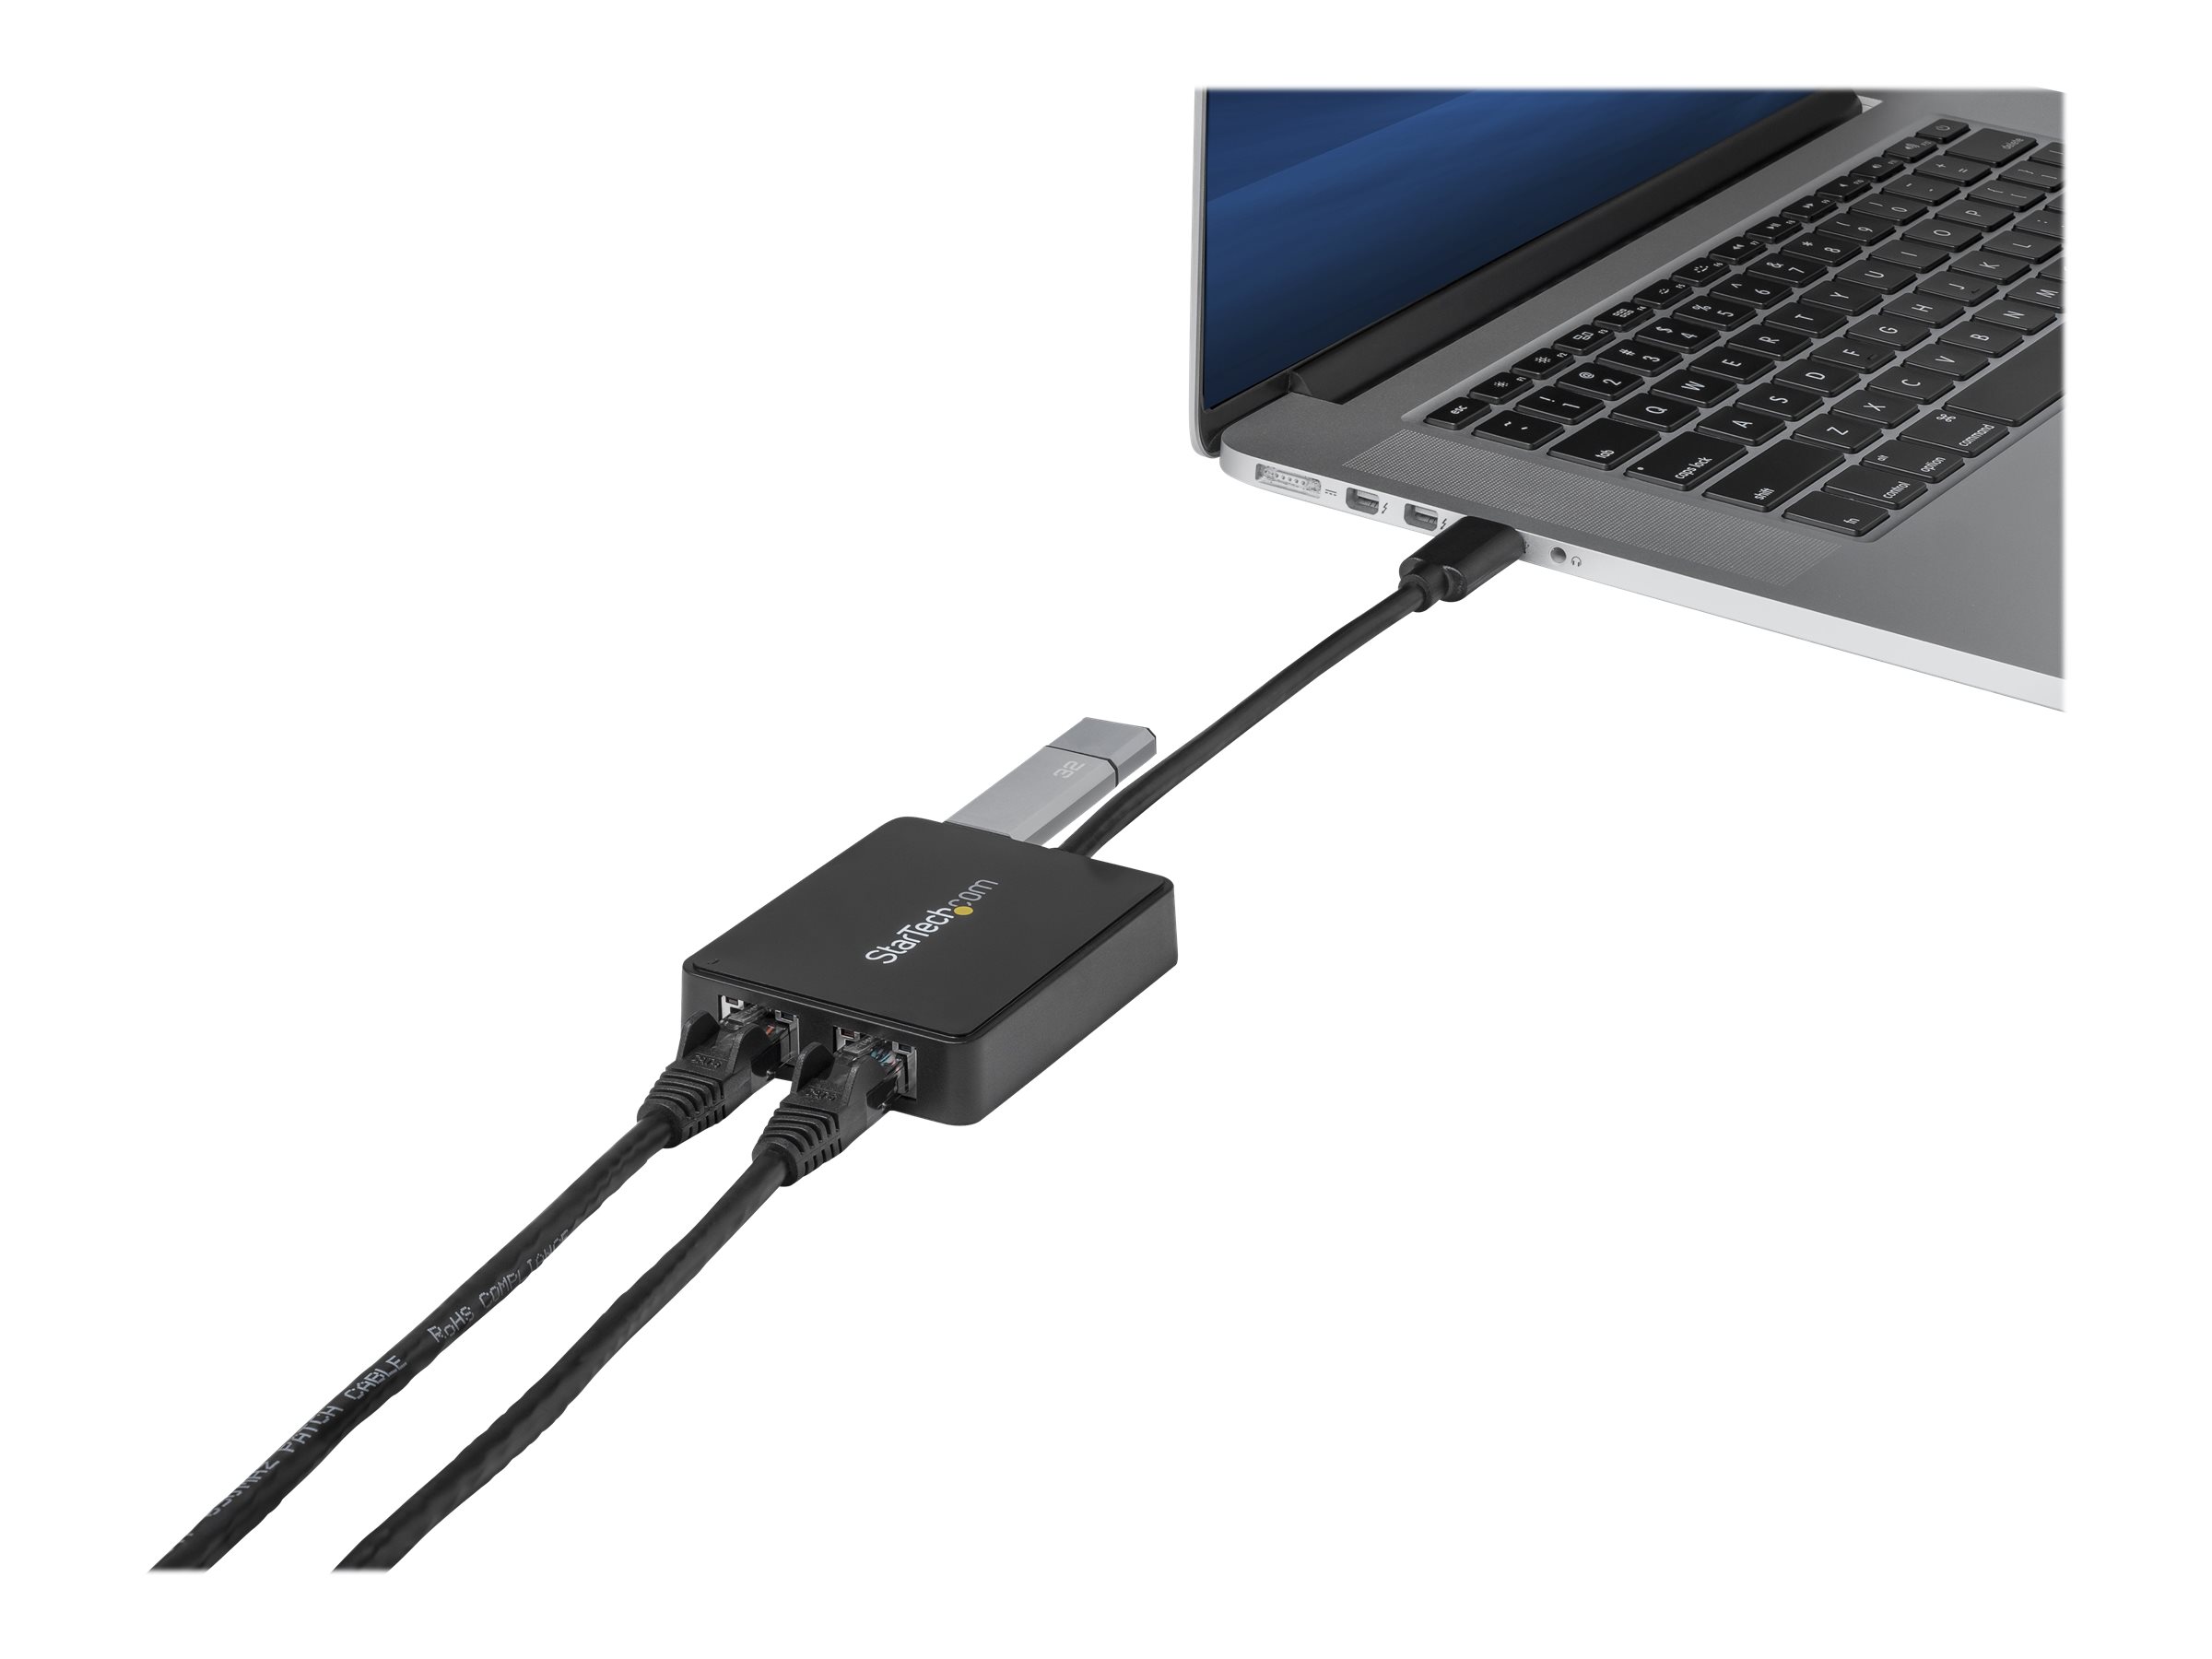 StarTech.com USB 3.0 SuperSpeed auf Dual Port Gigabit Ethernet LAN Adapter - 10/100/1000 NIC Netzwerkadapter mit USB-Port - Schwarz - Netzwerkadapter - USB 3.0 - GigE